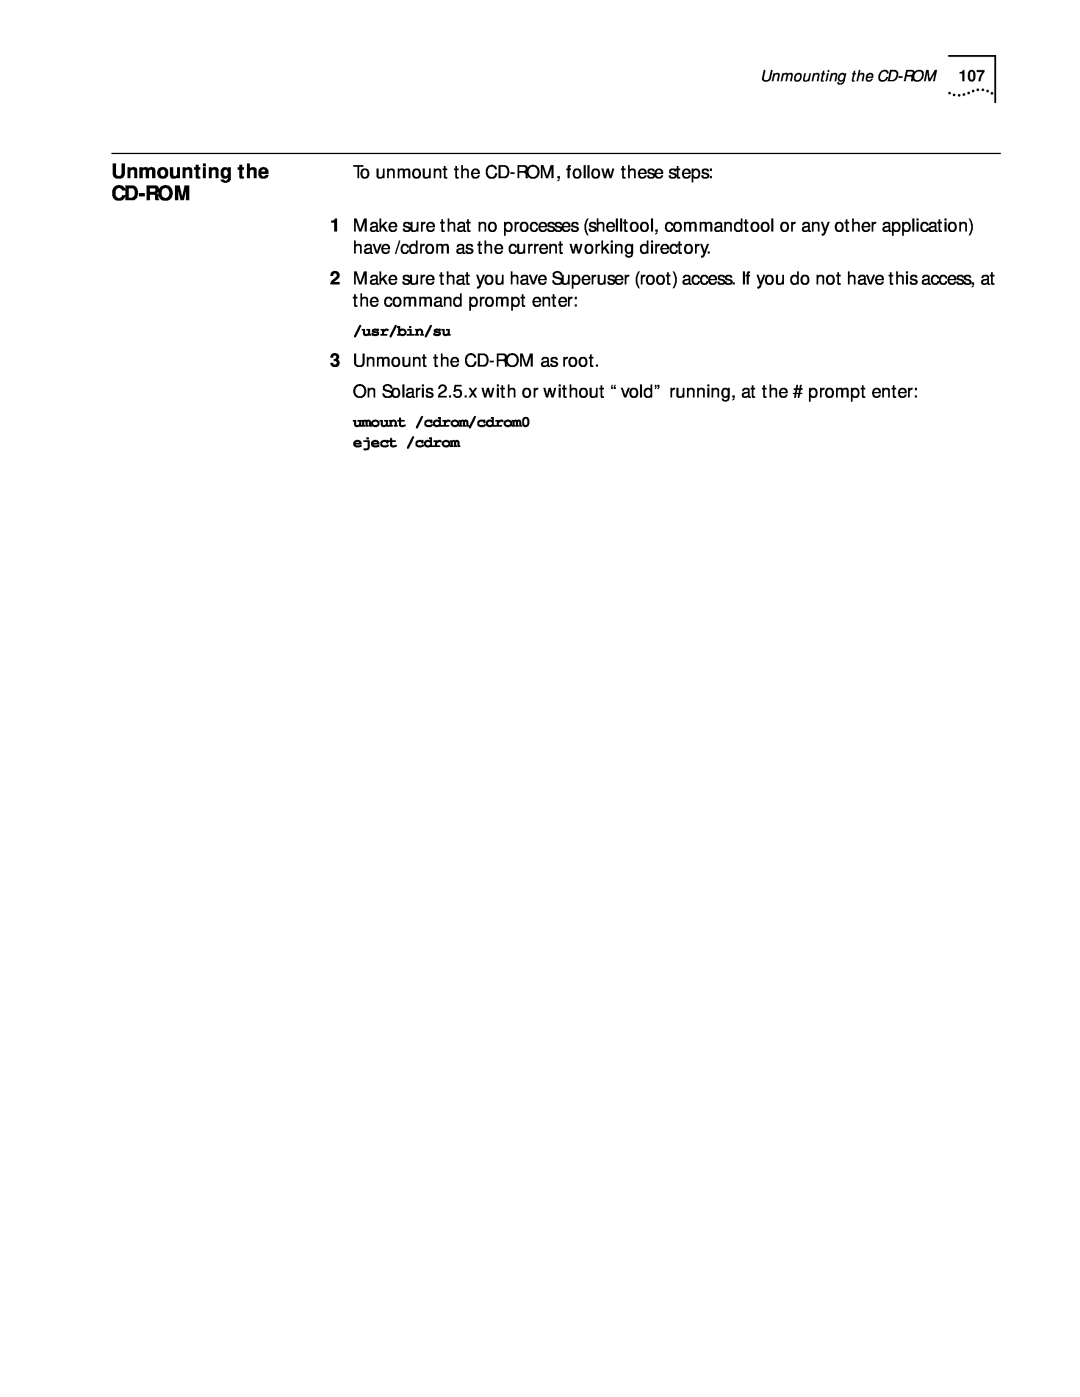 3Com ENTERPRISE OS 11.3 manual Unmounting the, Cd-Rom 